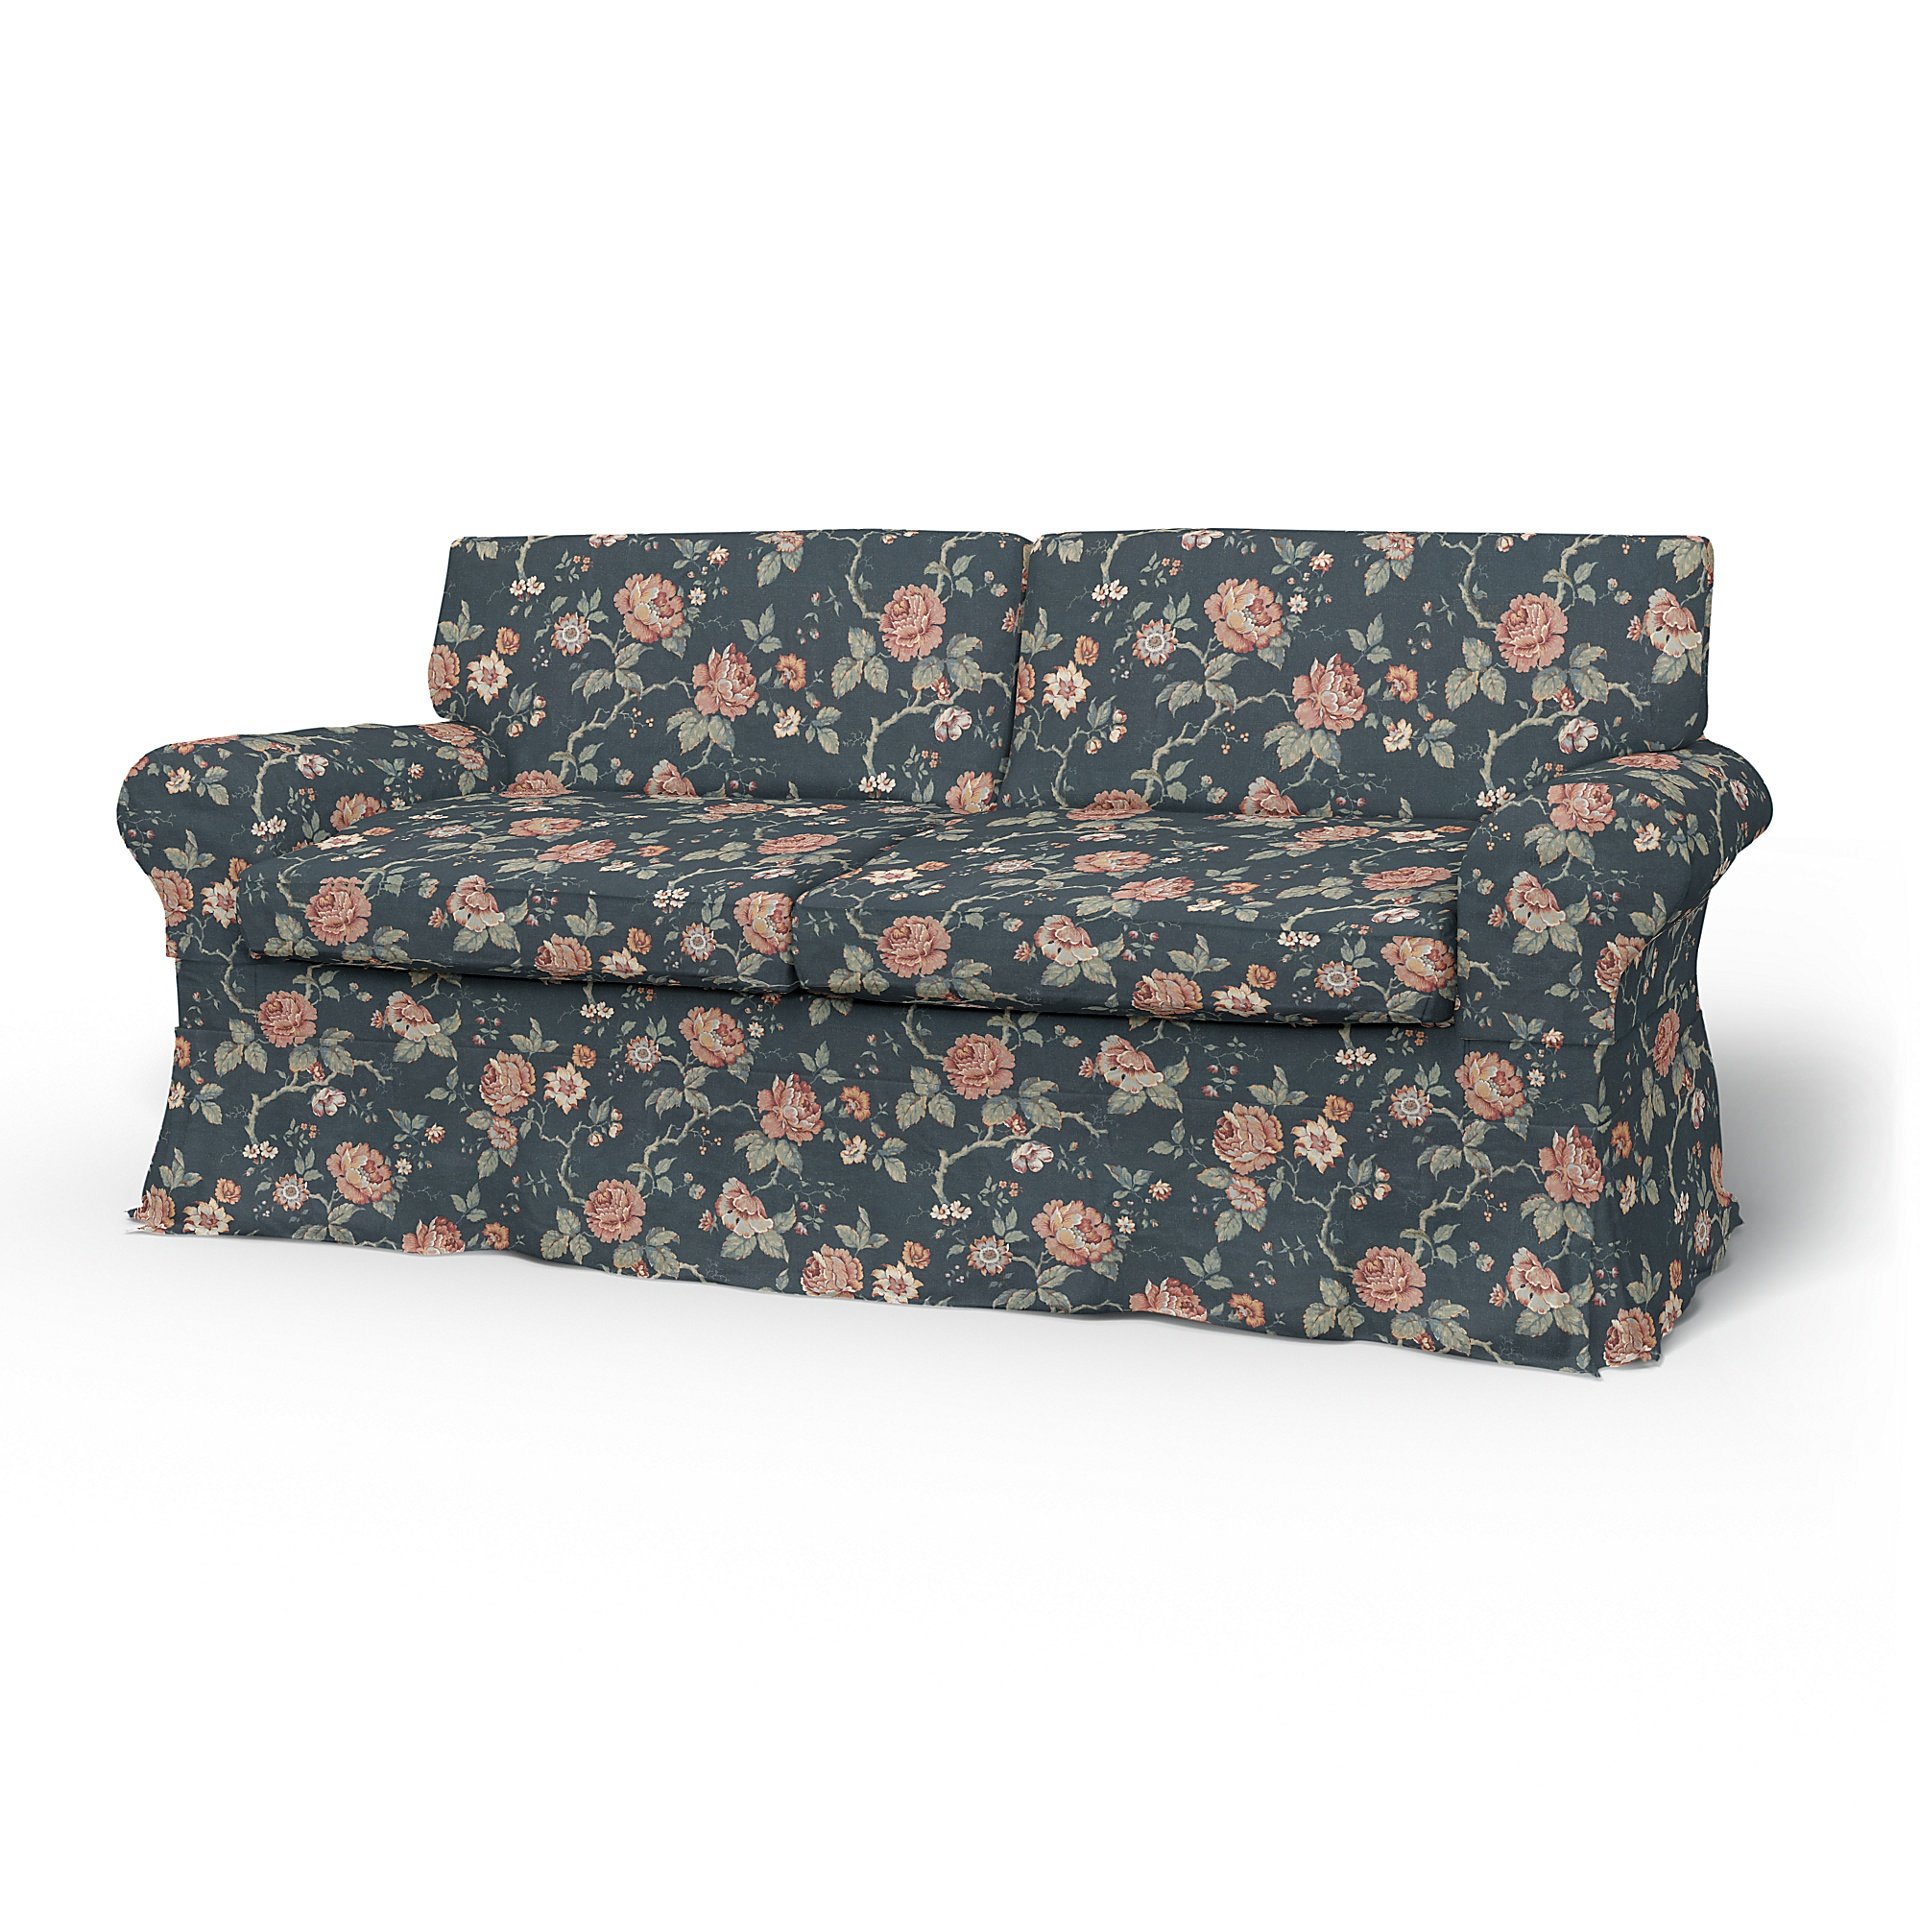 IKEA - Ektorp 2 Seater Sofa Bed Cover, Rosentrad Dark, BEMZ x BORASTAPETER COLLECTION - Bemz